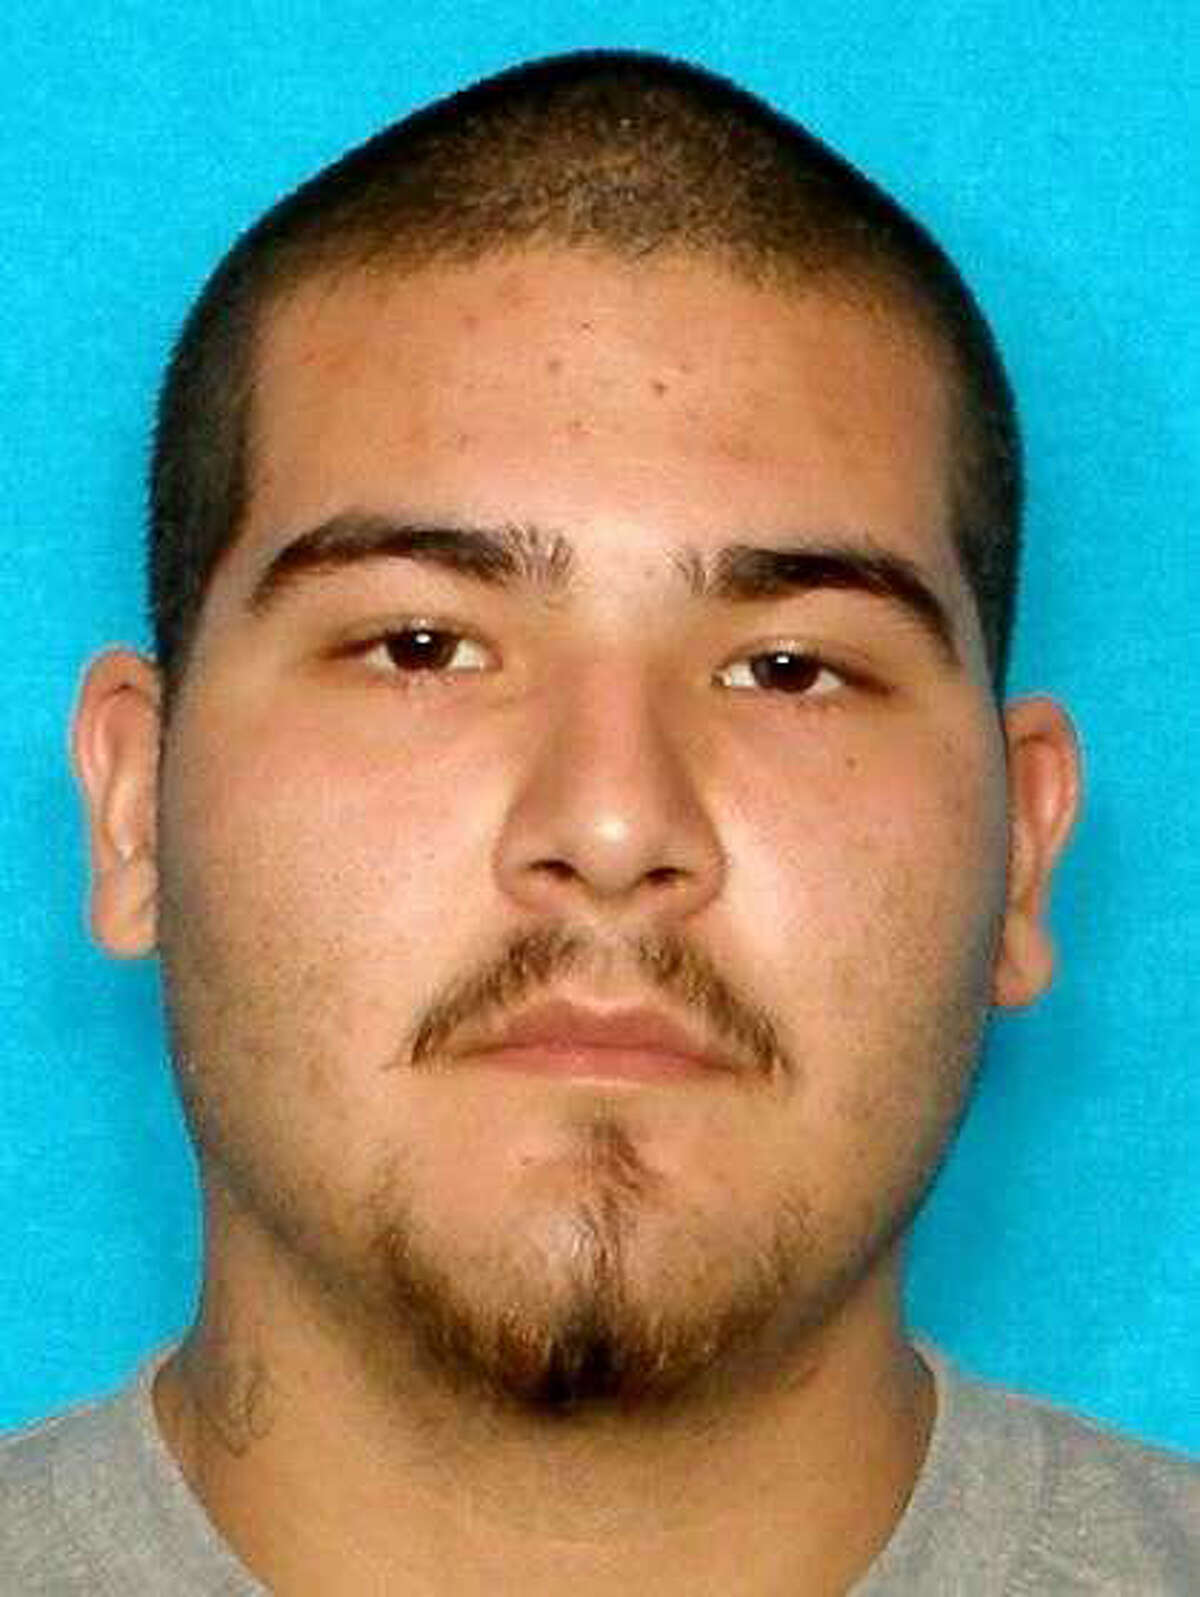 U.S. Marshals nab suspect near San Antonio